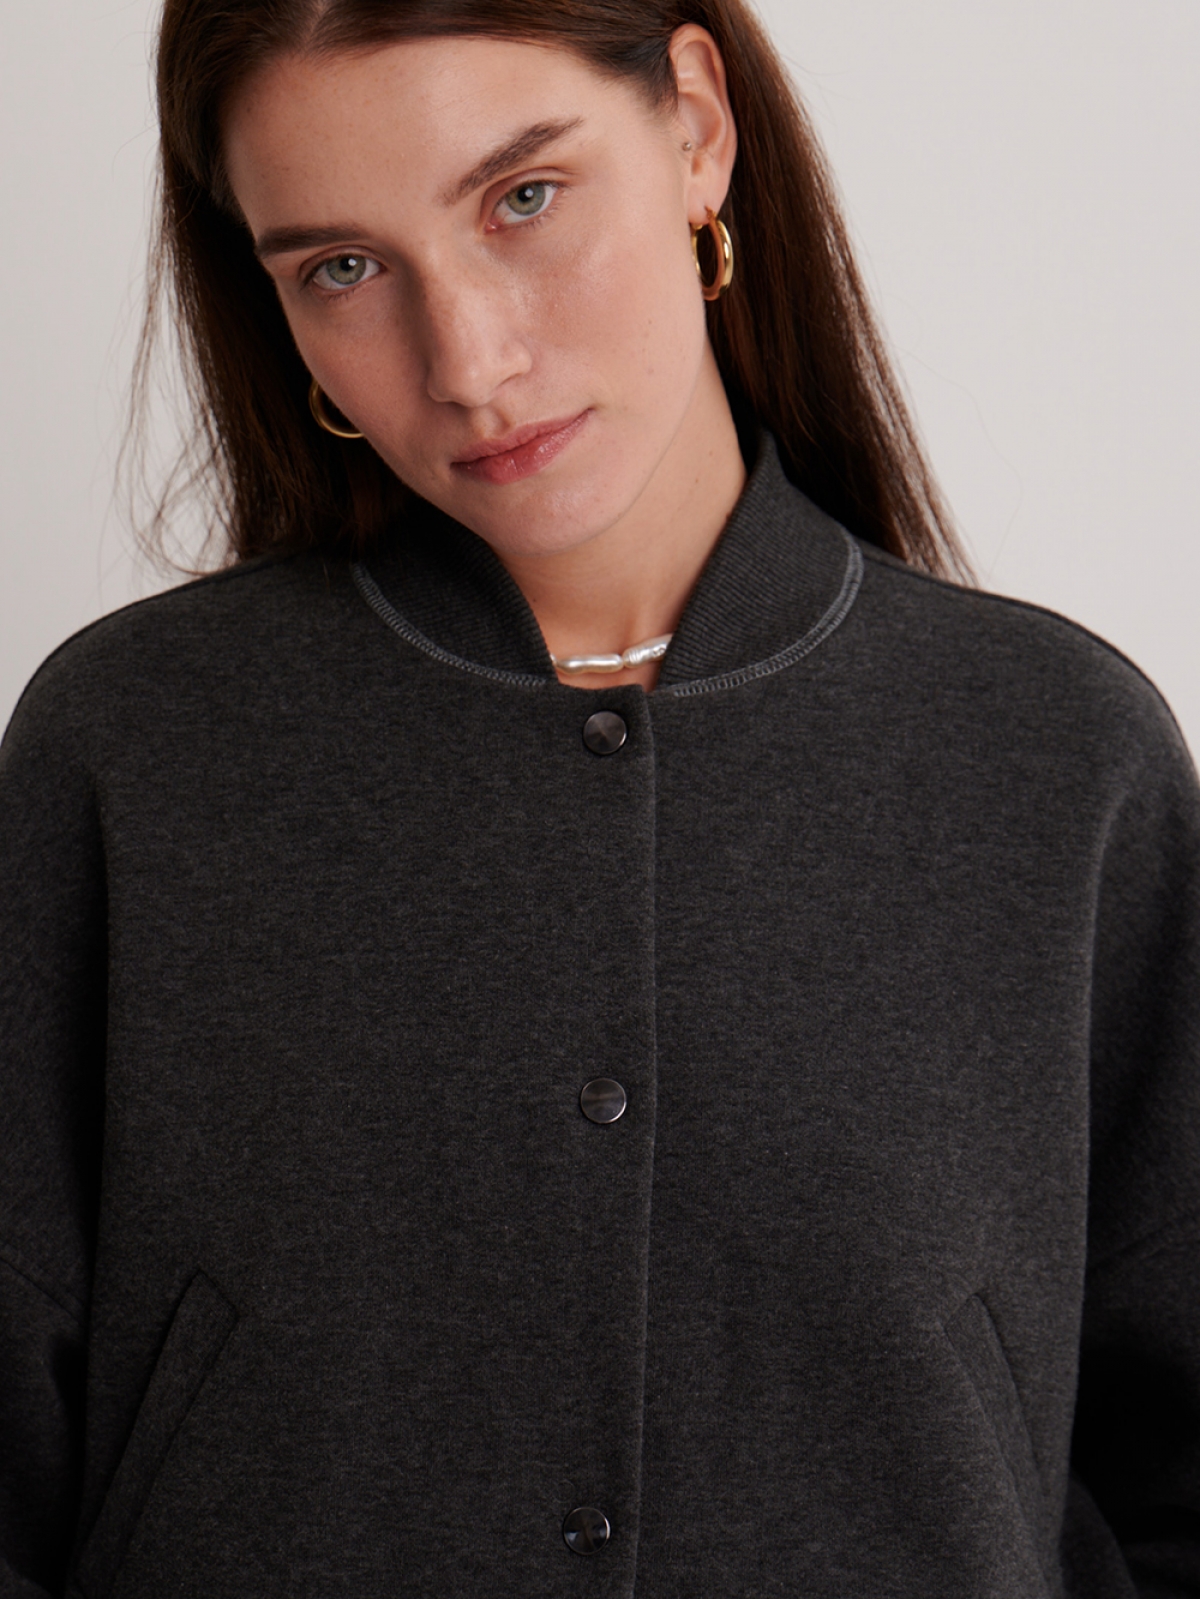 Grey warm fleece sweatshirt